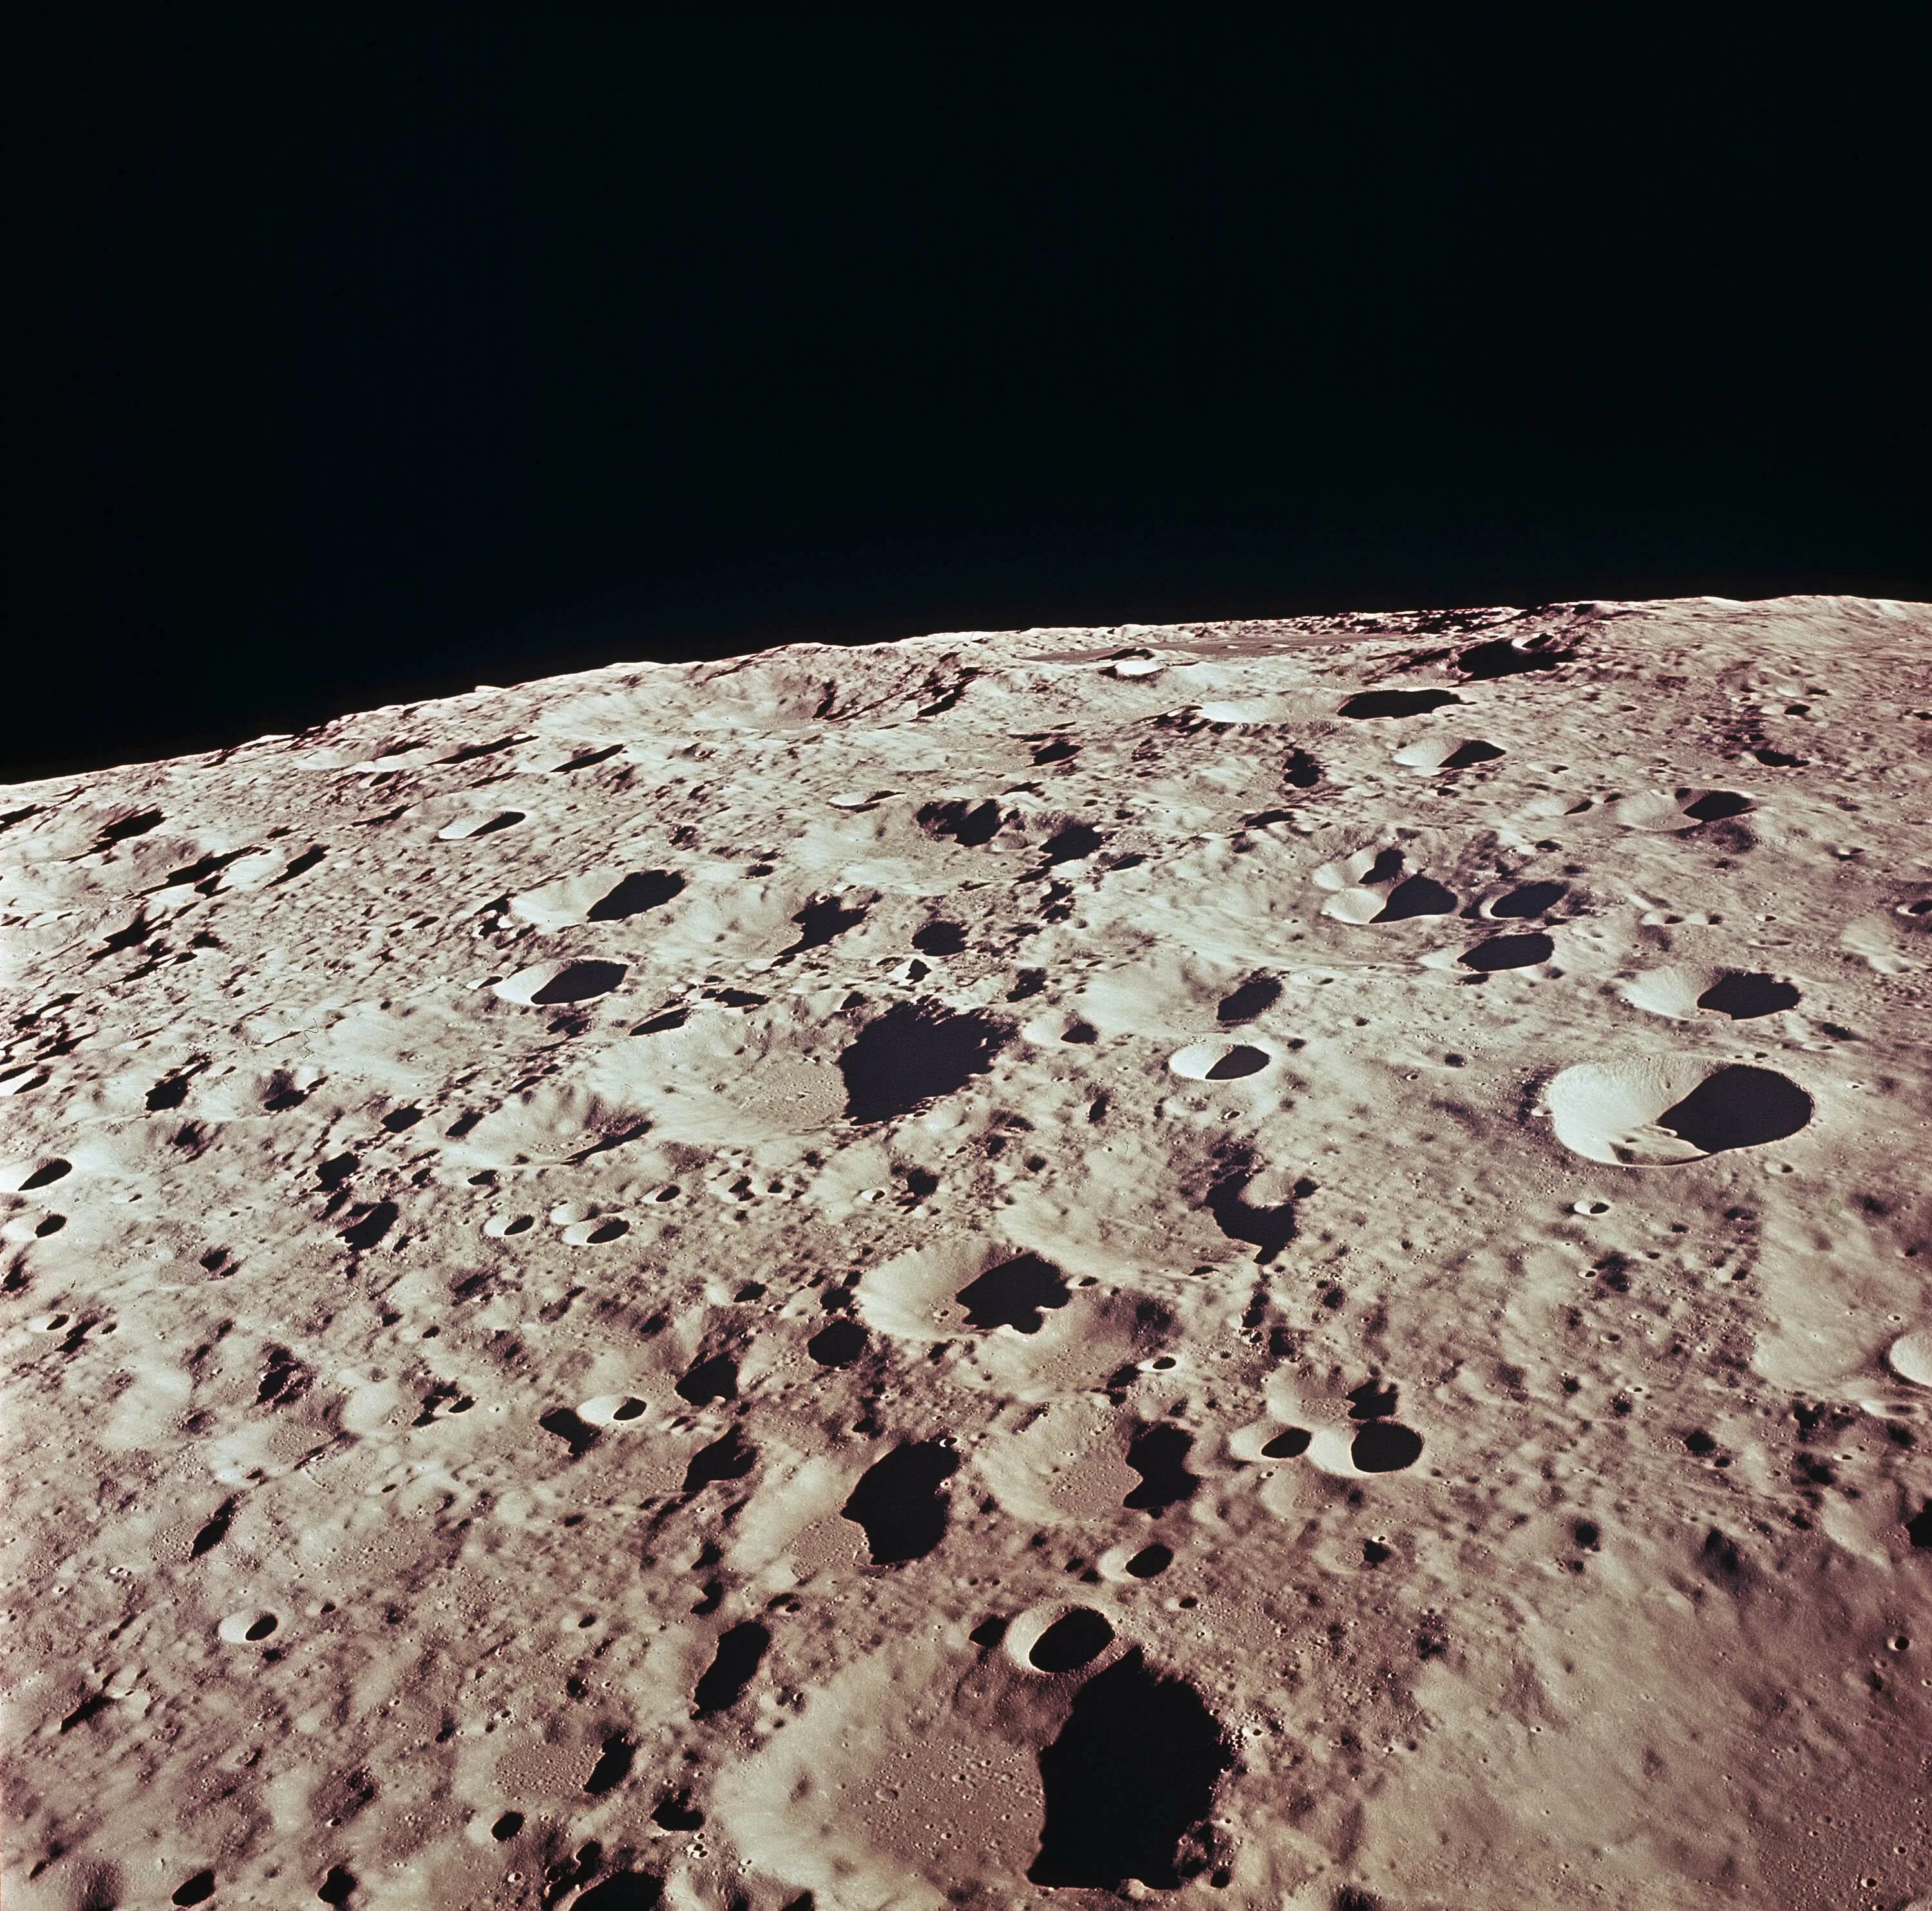 Большой кратер луны. Кратер Аполлон на Луне. Кратер Лунная поверхность Луны. Секретные снимки Луны НАСА. Лунный кратер, астероид (4000) Гиппарх.